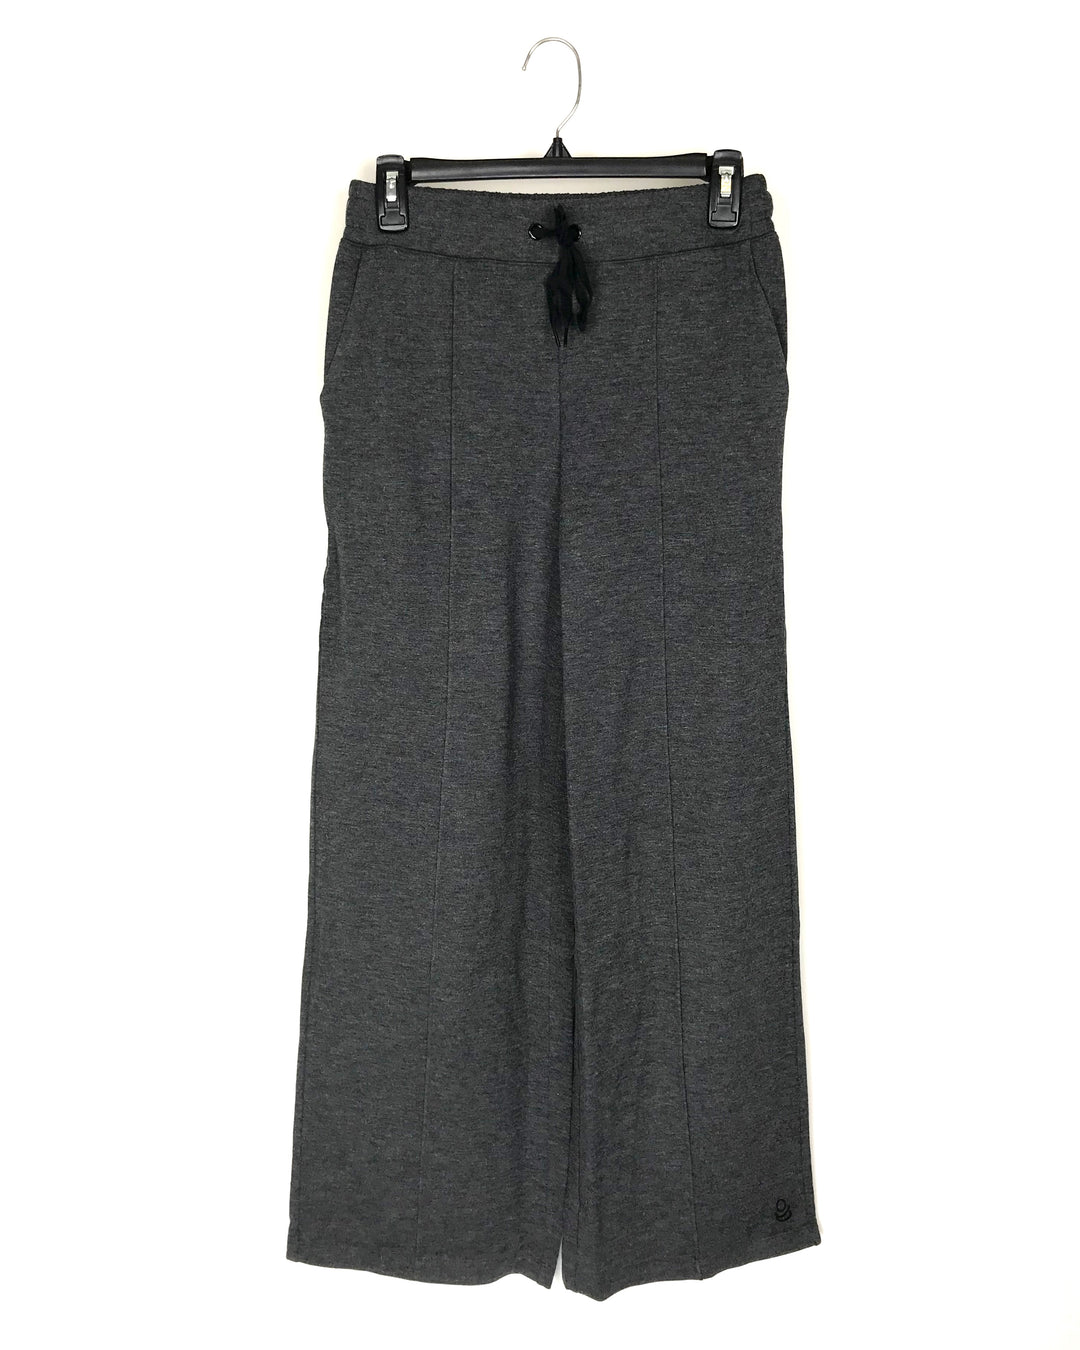 Grey Sweatpants - Size 2/4